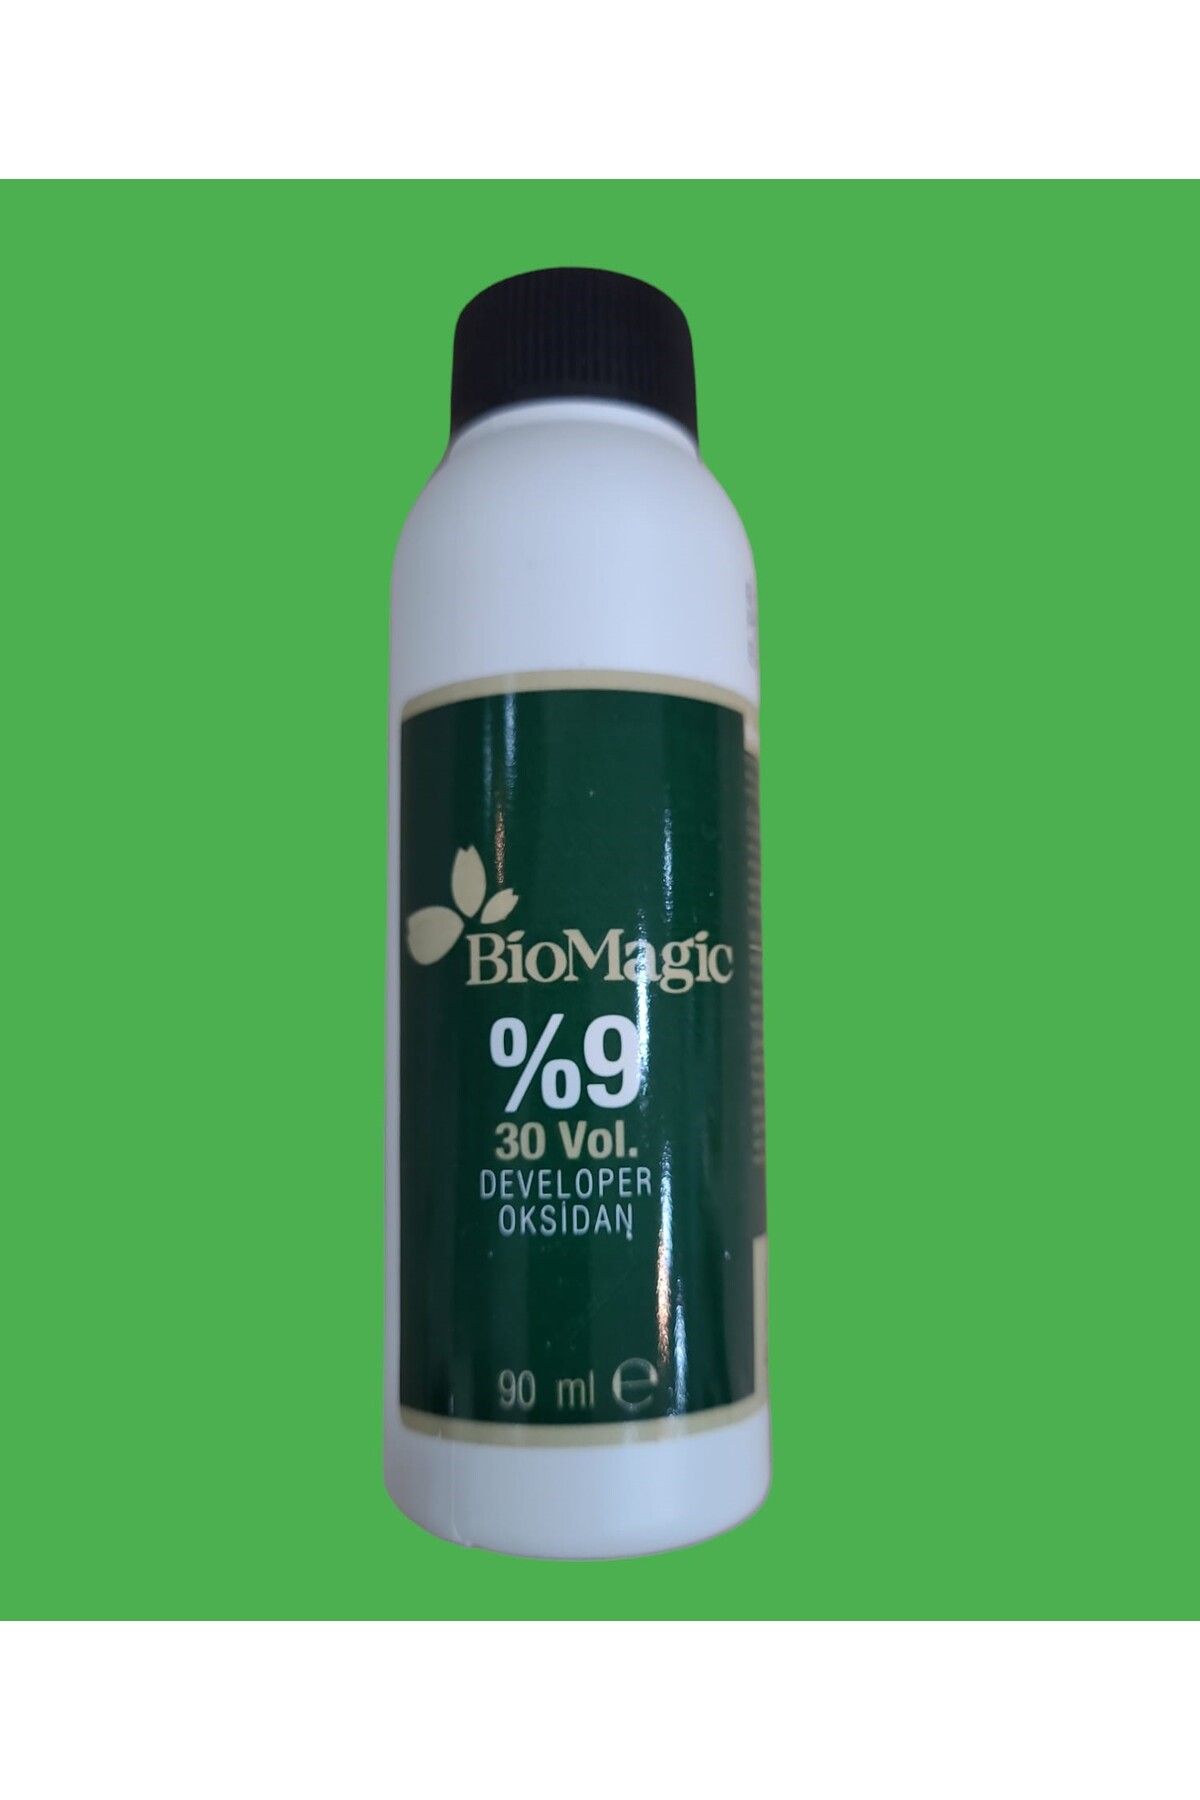 BioMagic Yeni 30 Volum (%9) Developer Oksidan 90 ml (SIVI PEROKSİT)